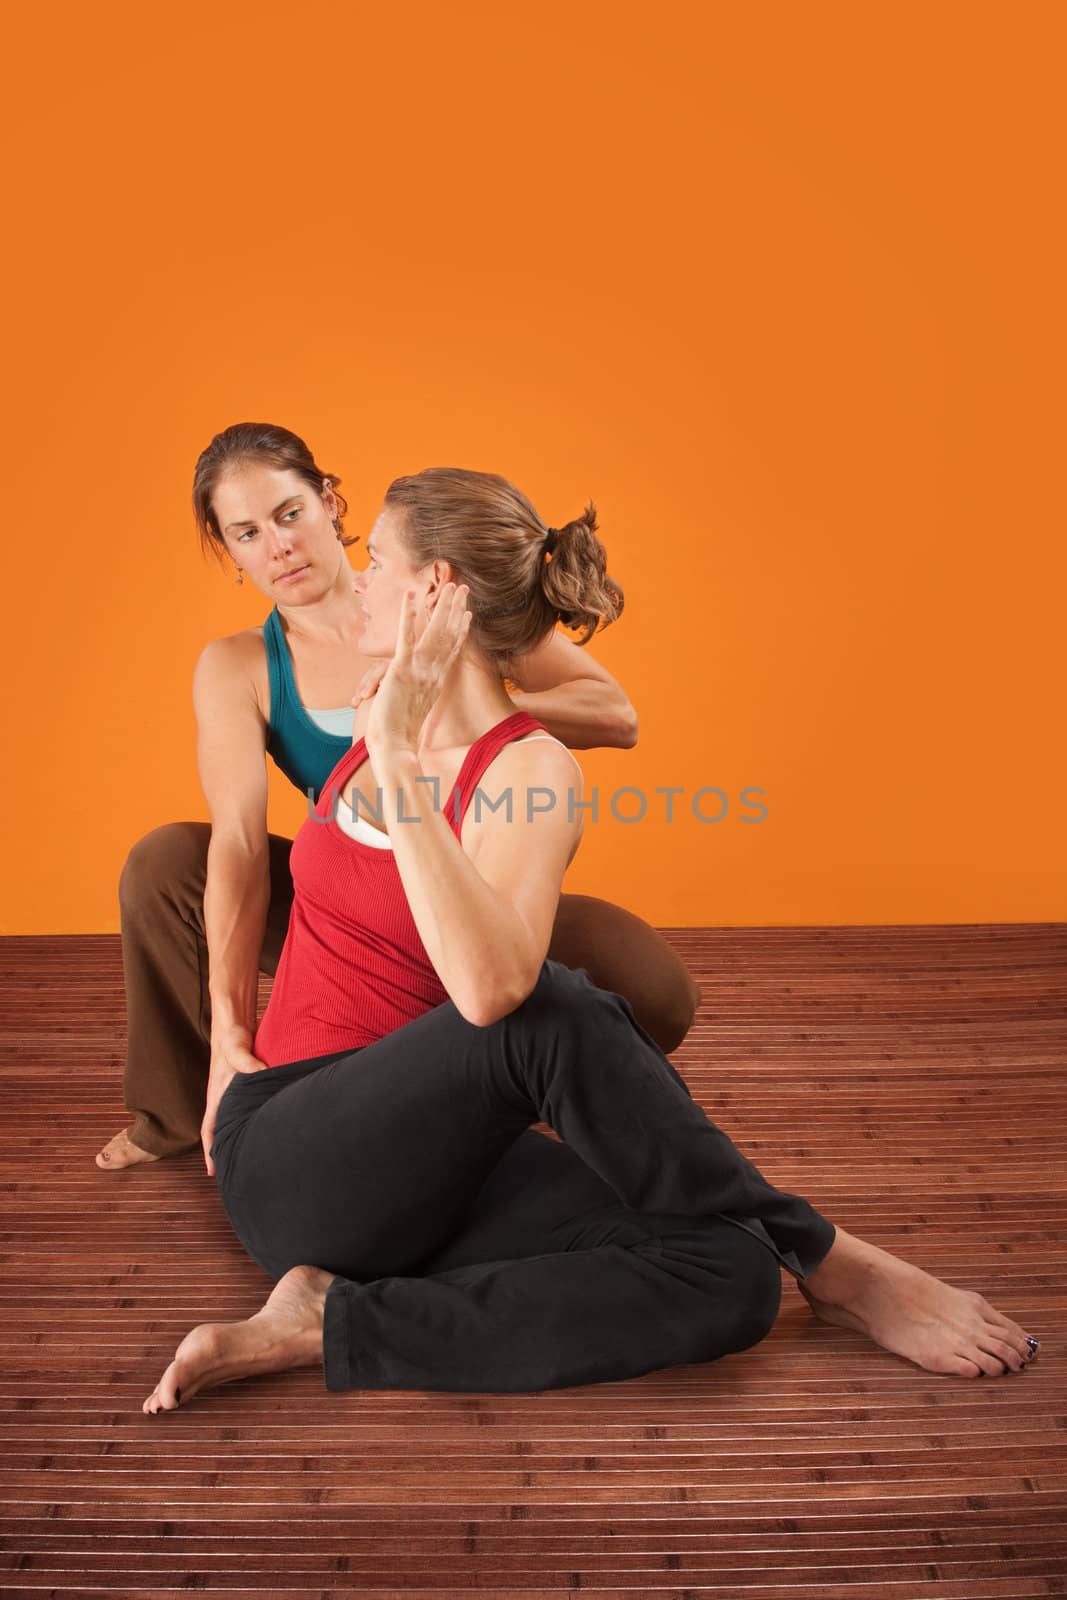 Yogasana trainer assisting student over orange background